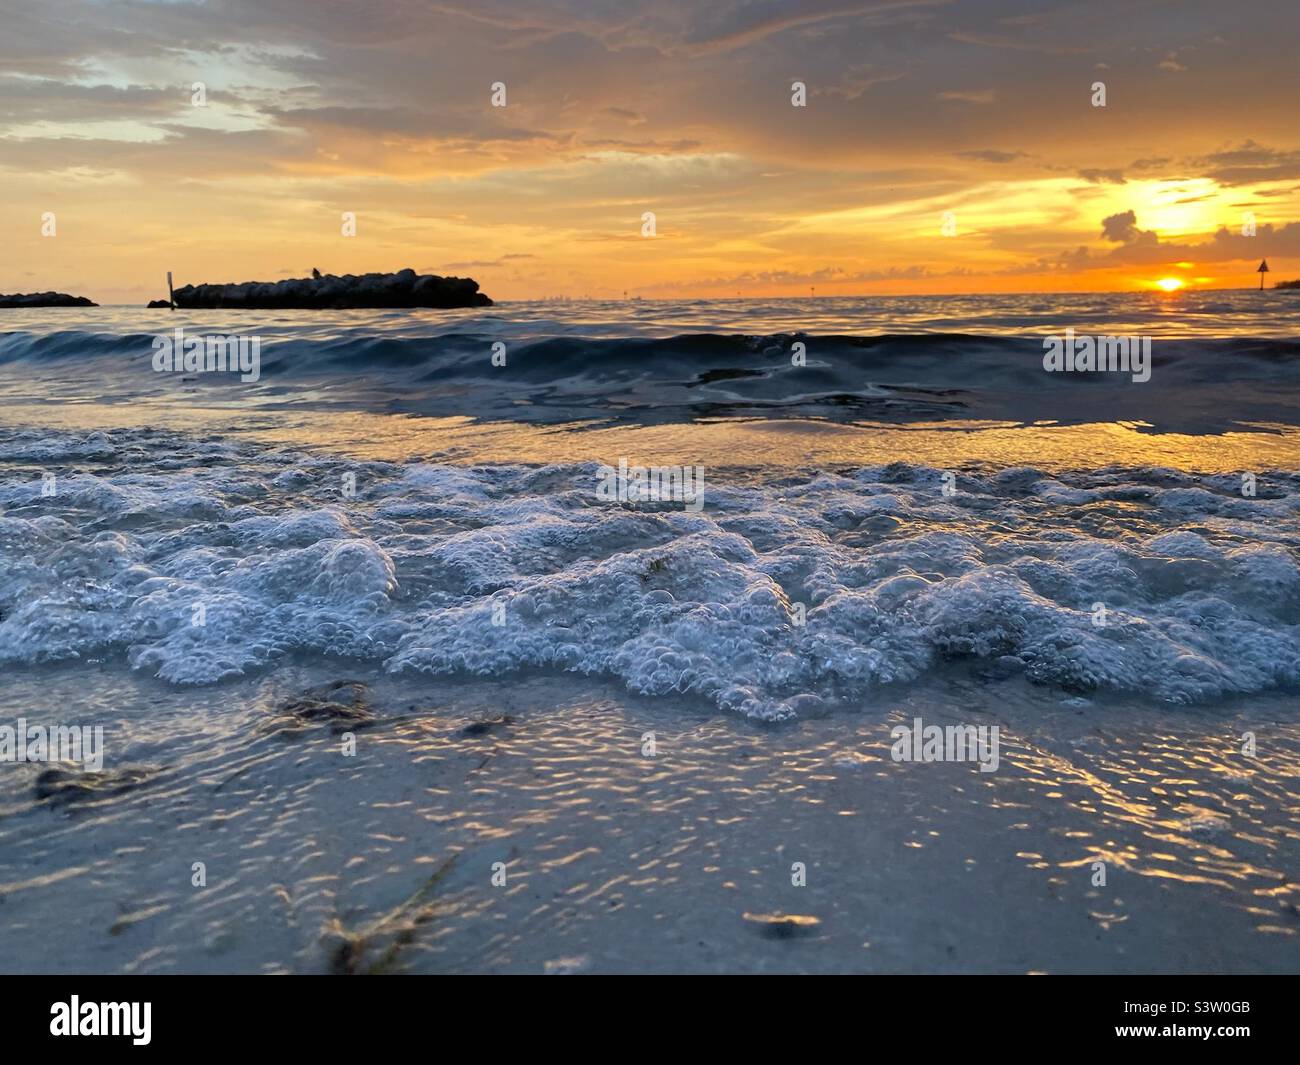 Small wave crashing on beach at sunset Stock Photo